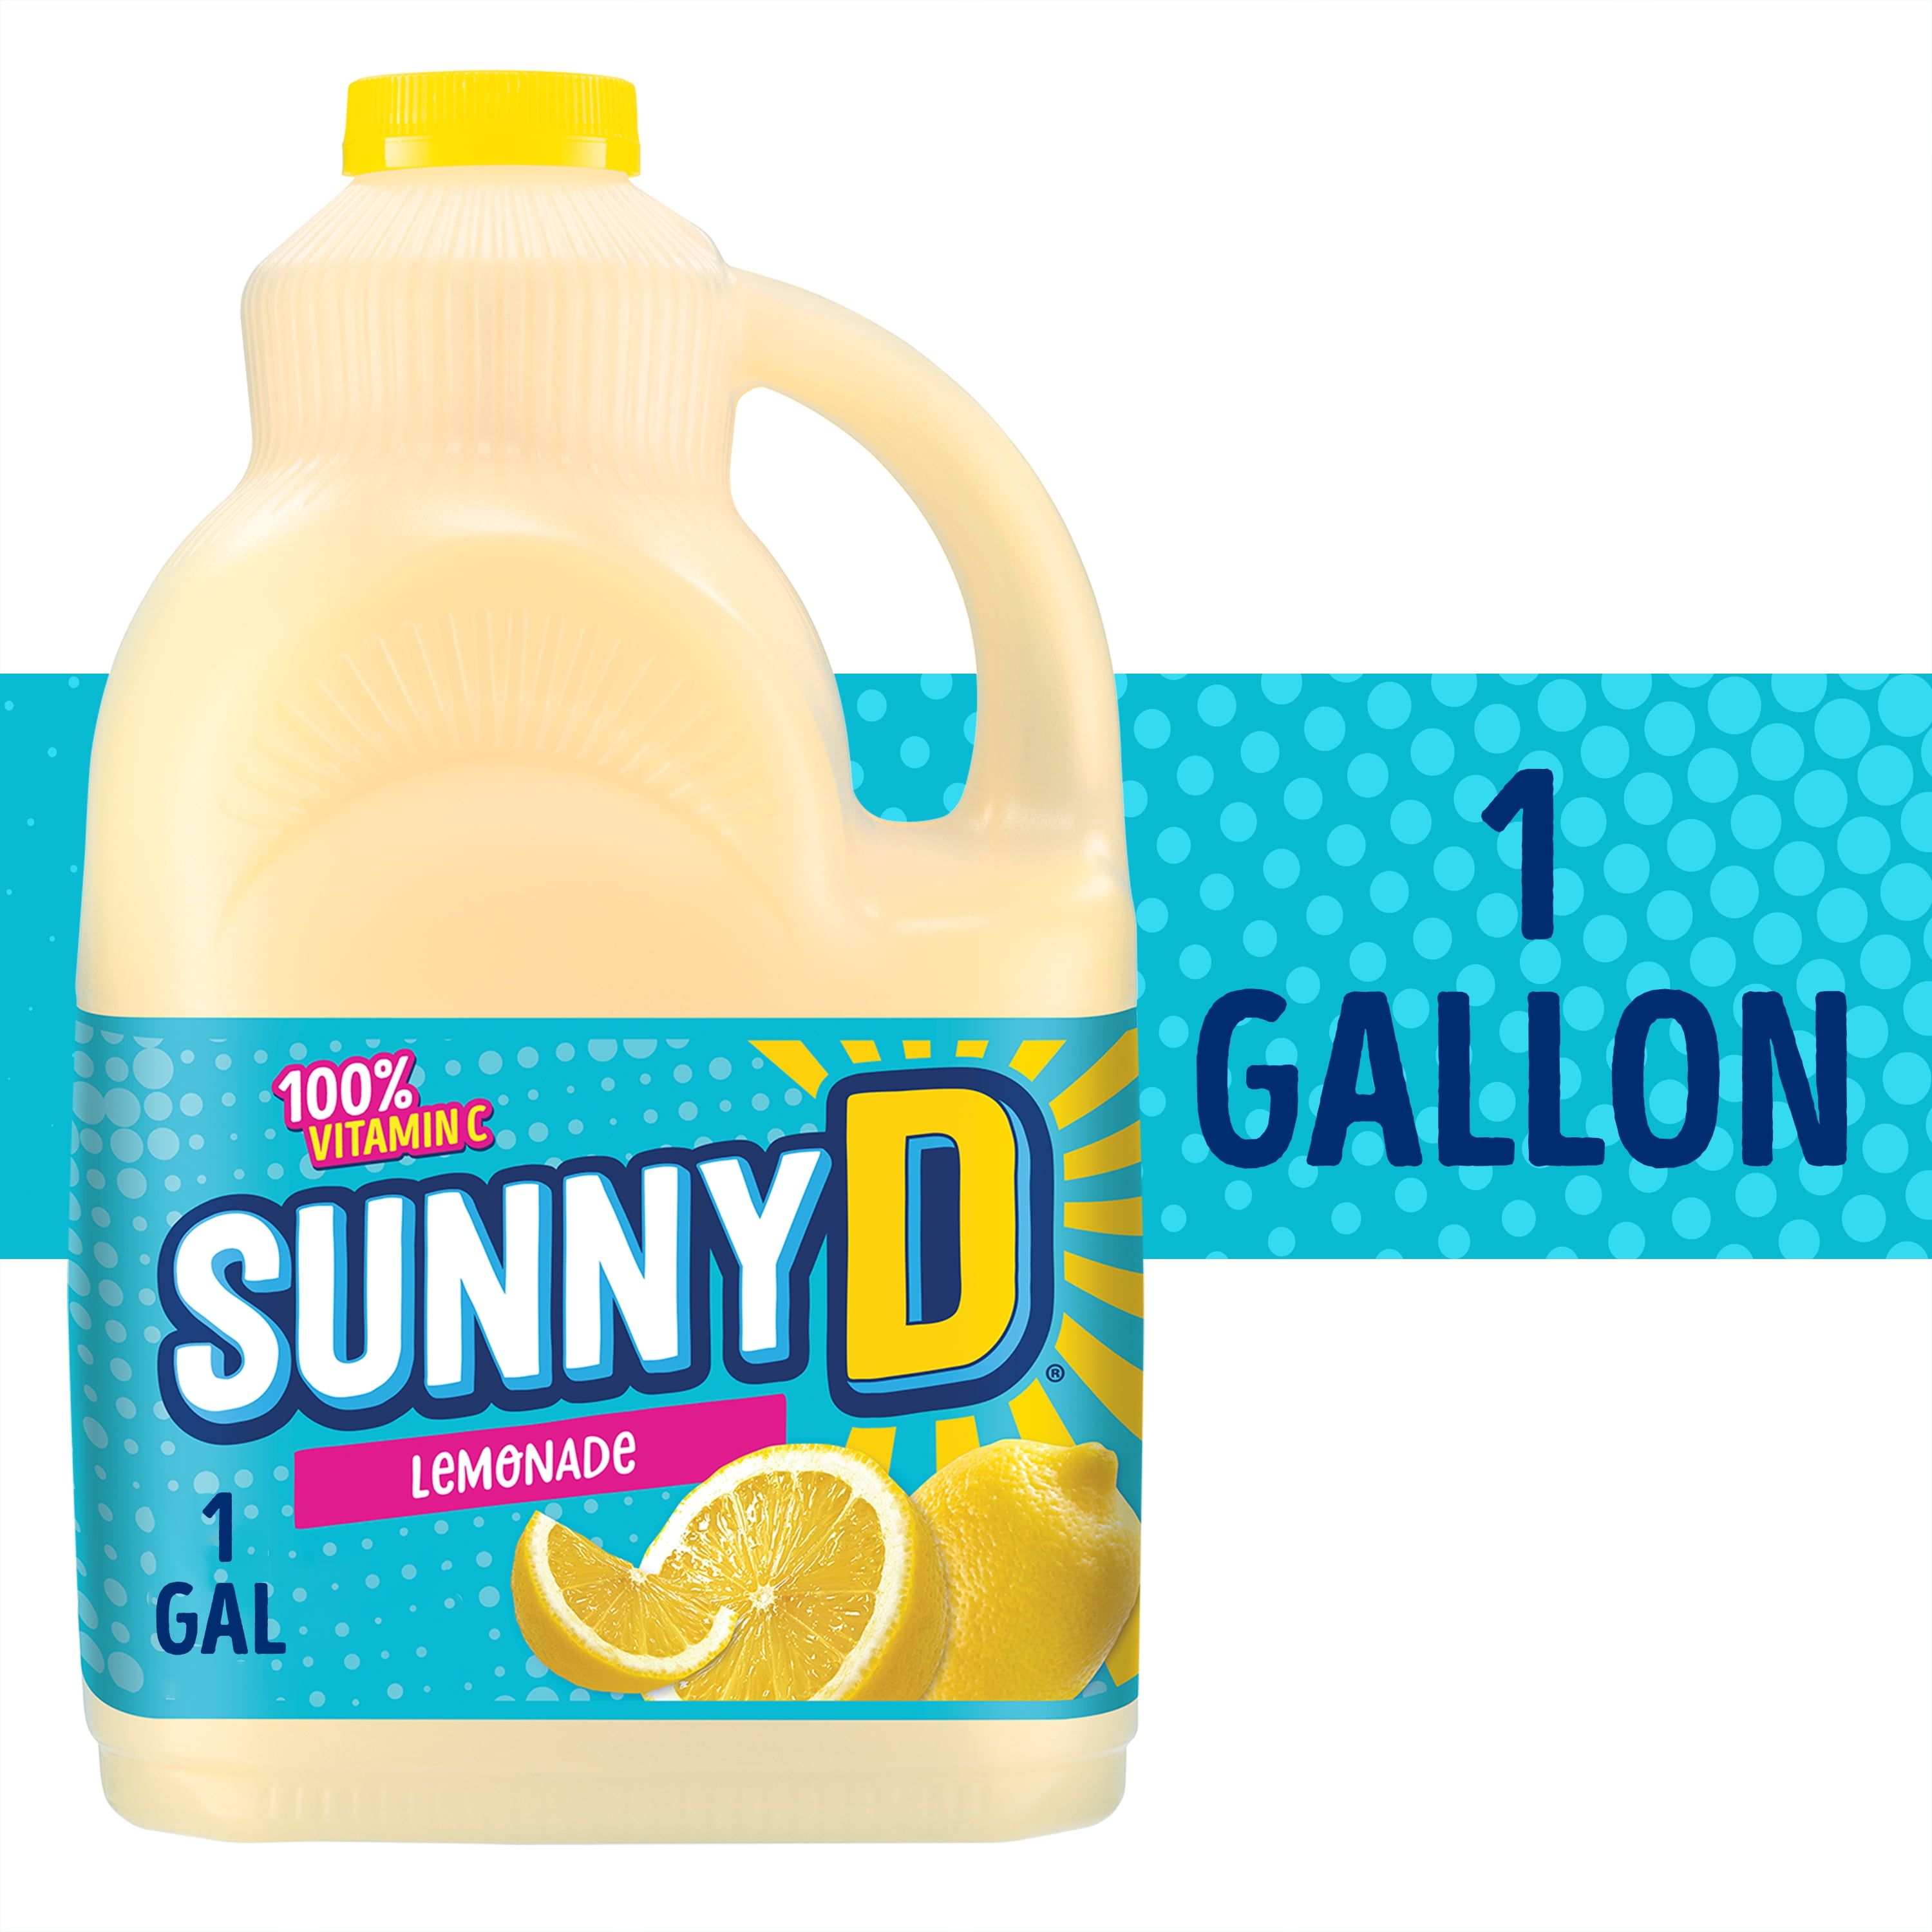 SUNNYD Lemonade Lemon Drink, 1 Gallon Bottle - Walmart.com